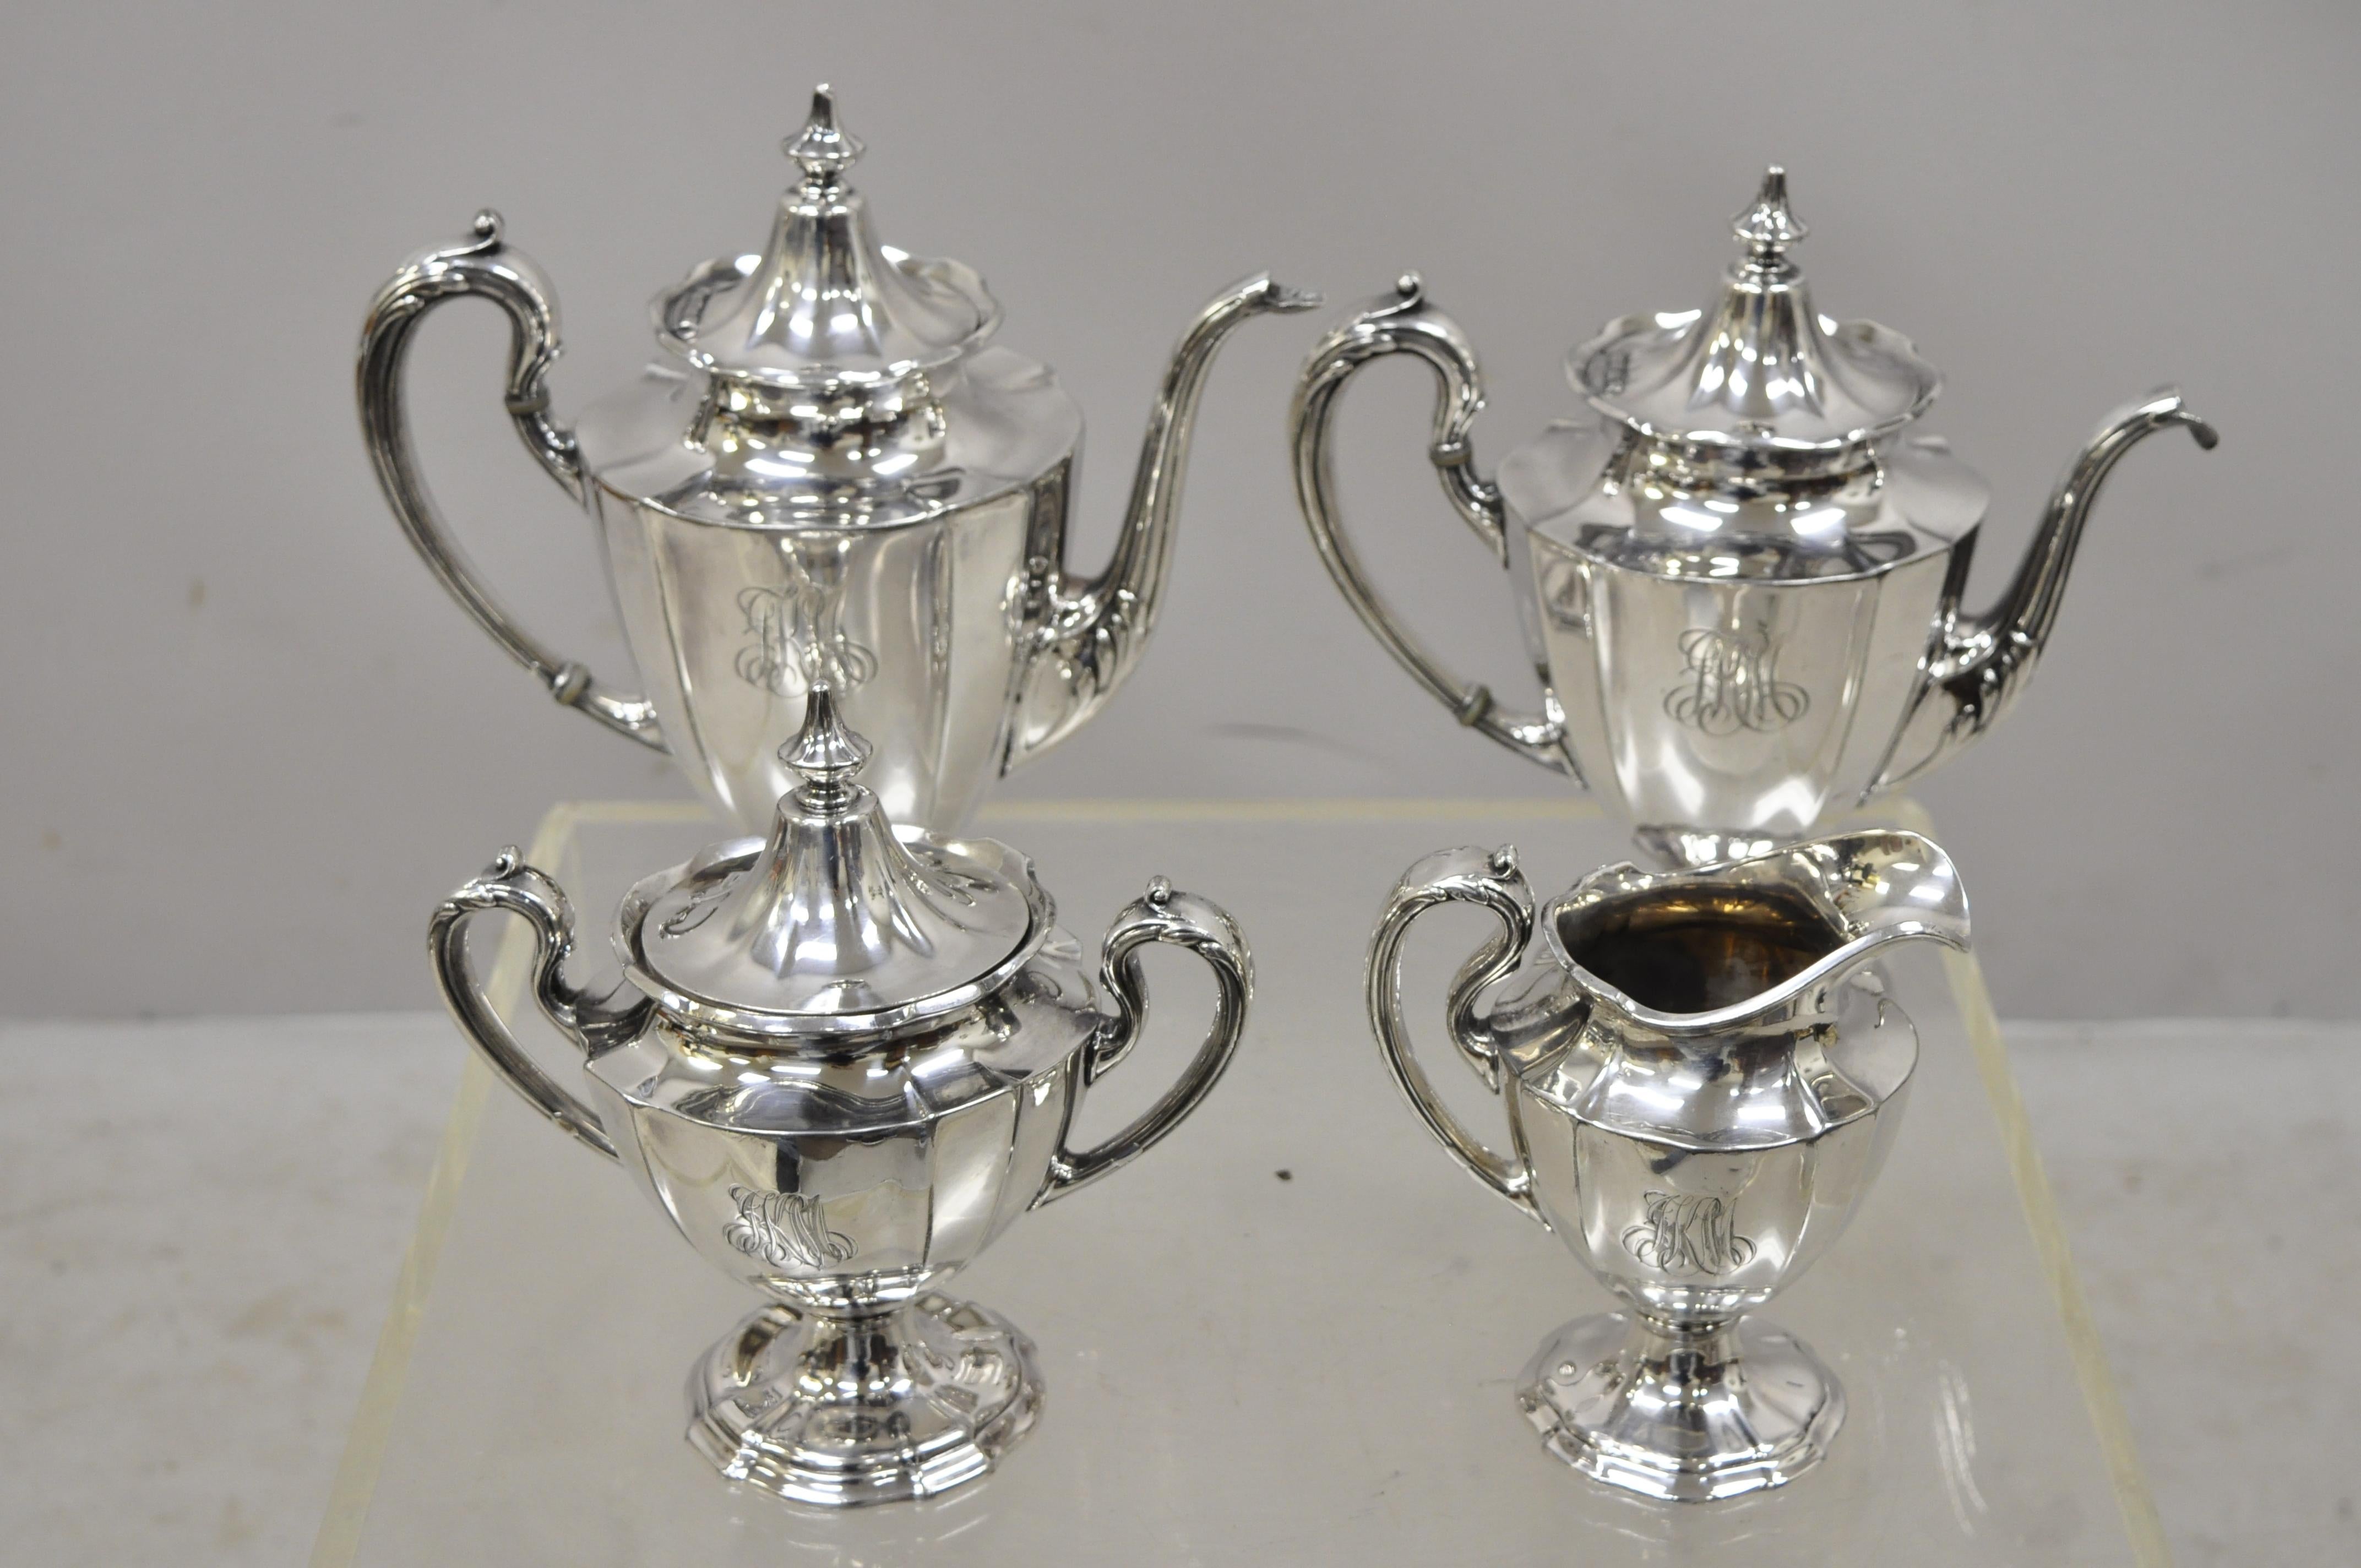 Reed & Barton 3890 Silver Plate Tea Coffee Pot Creamer Service Set of 4 Pieces 2